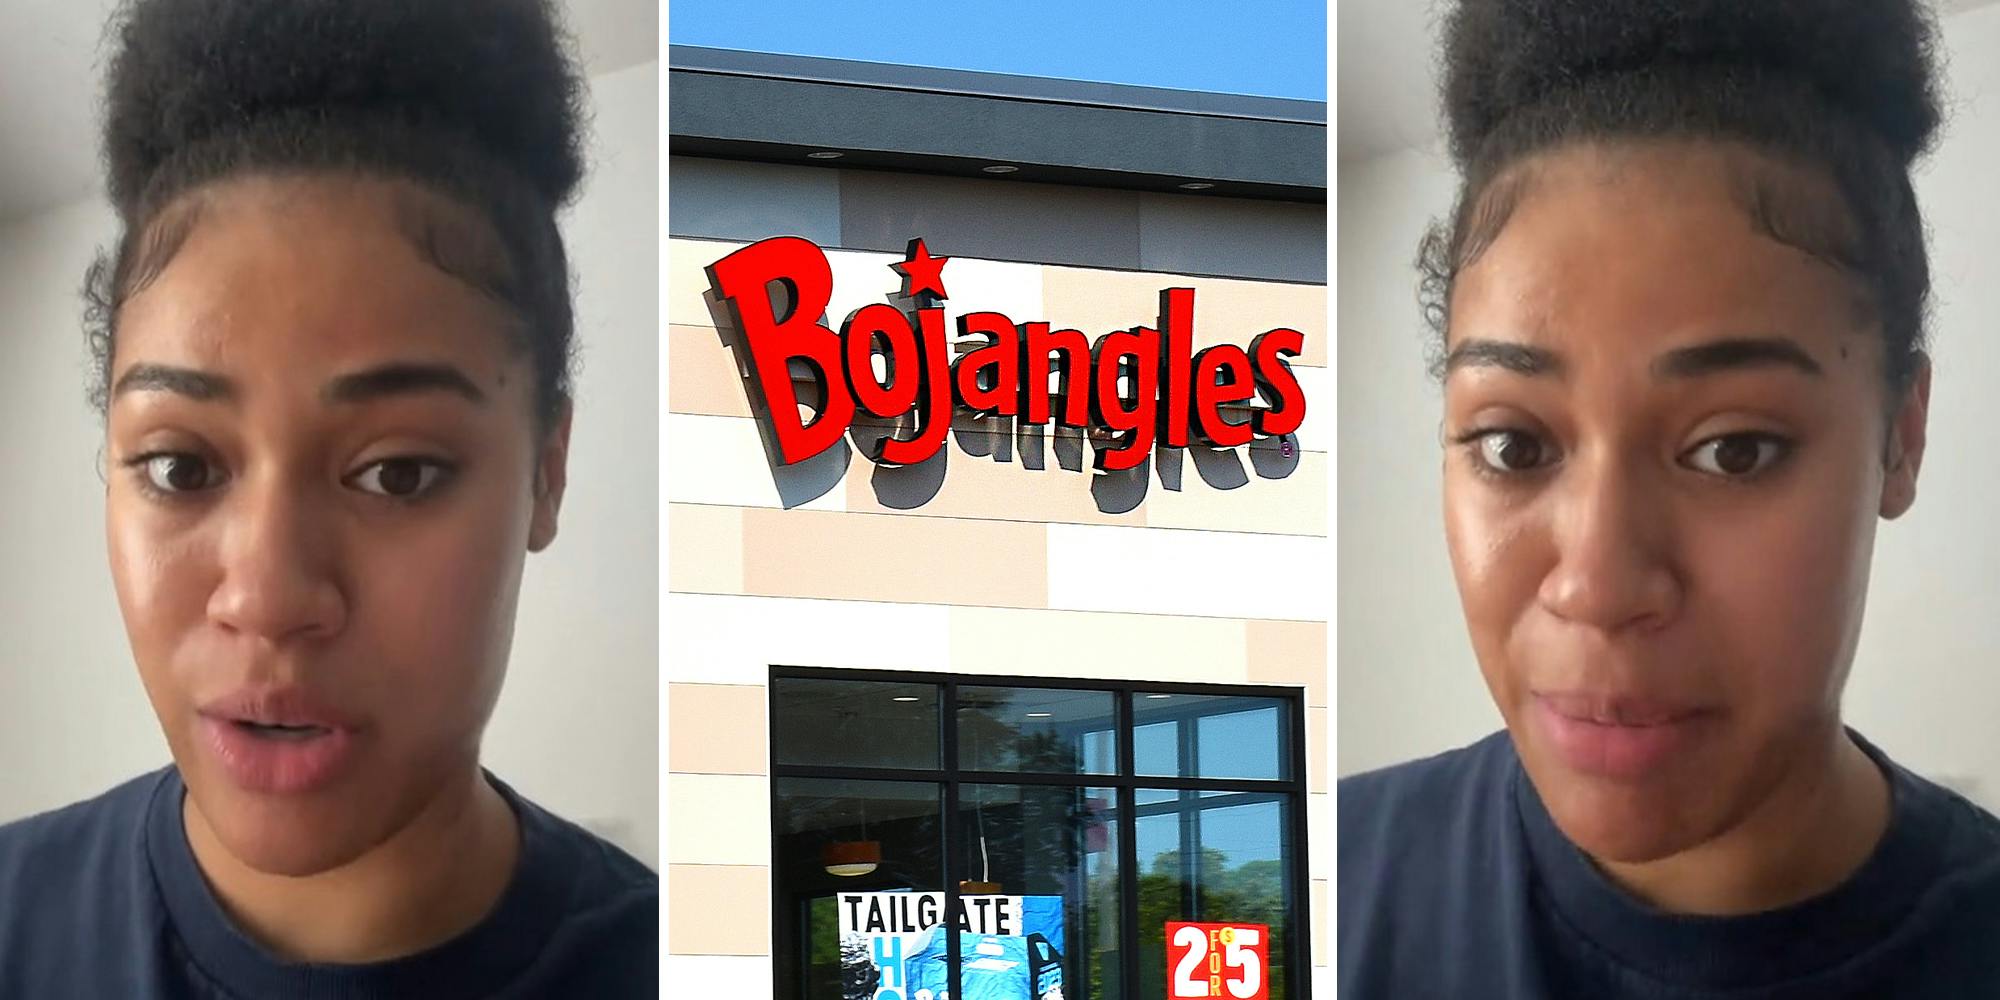 Bojangles customer gets asked to leave a tip